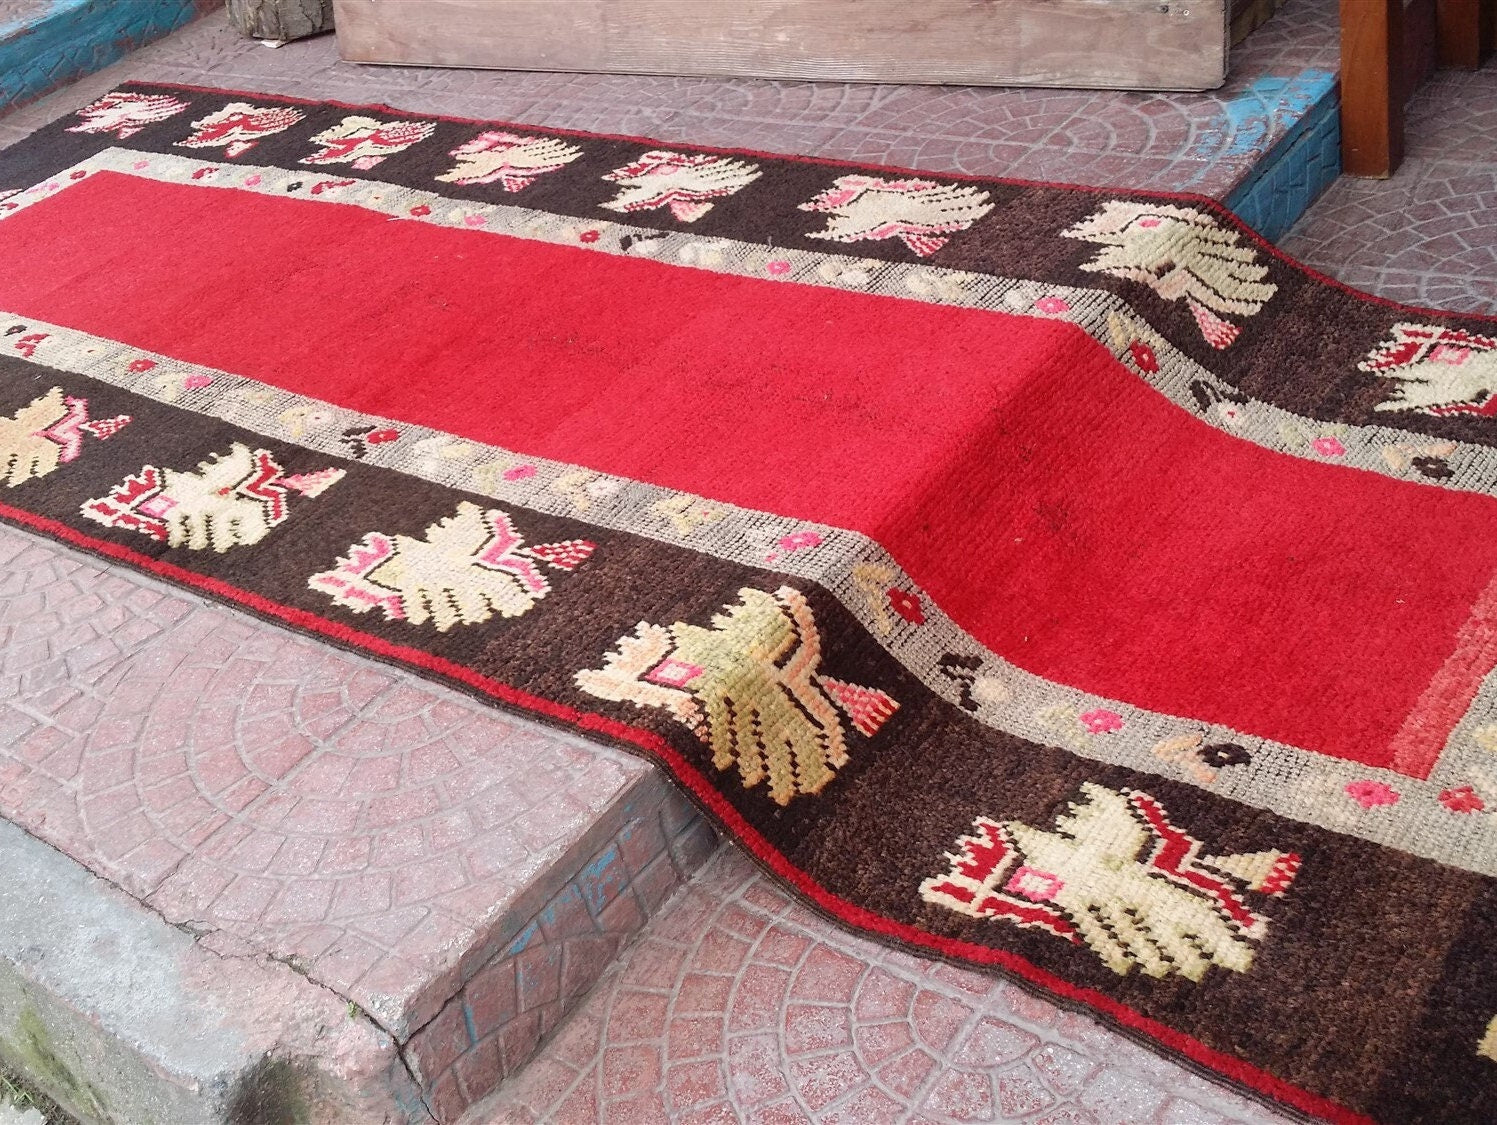 Turkish Kilim Runner Rug, 10 x 3 ft Red and Black Natural Wool Long Hallway Rug, Handmade Persian Area, Passage or Corridor Rug